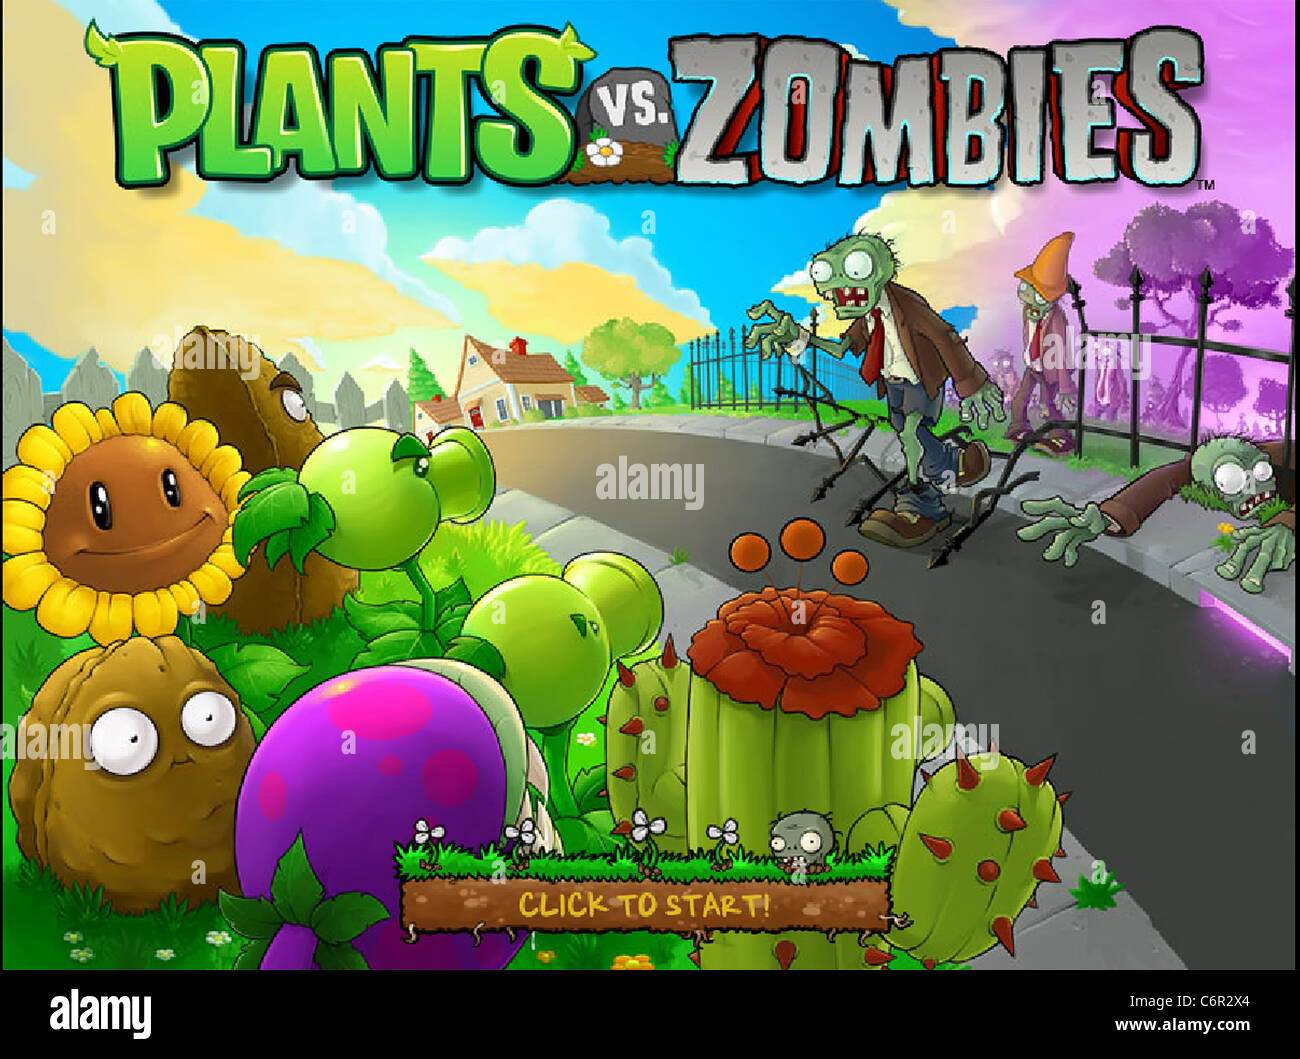 Plants vs zombies -Fotos und -Bildmaterial in hoher Auflösung – Alamy